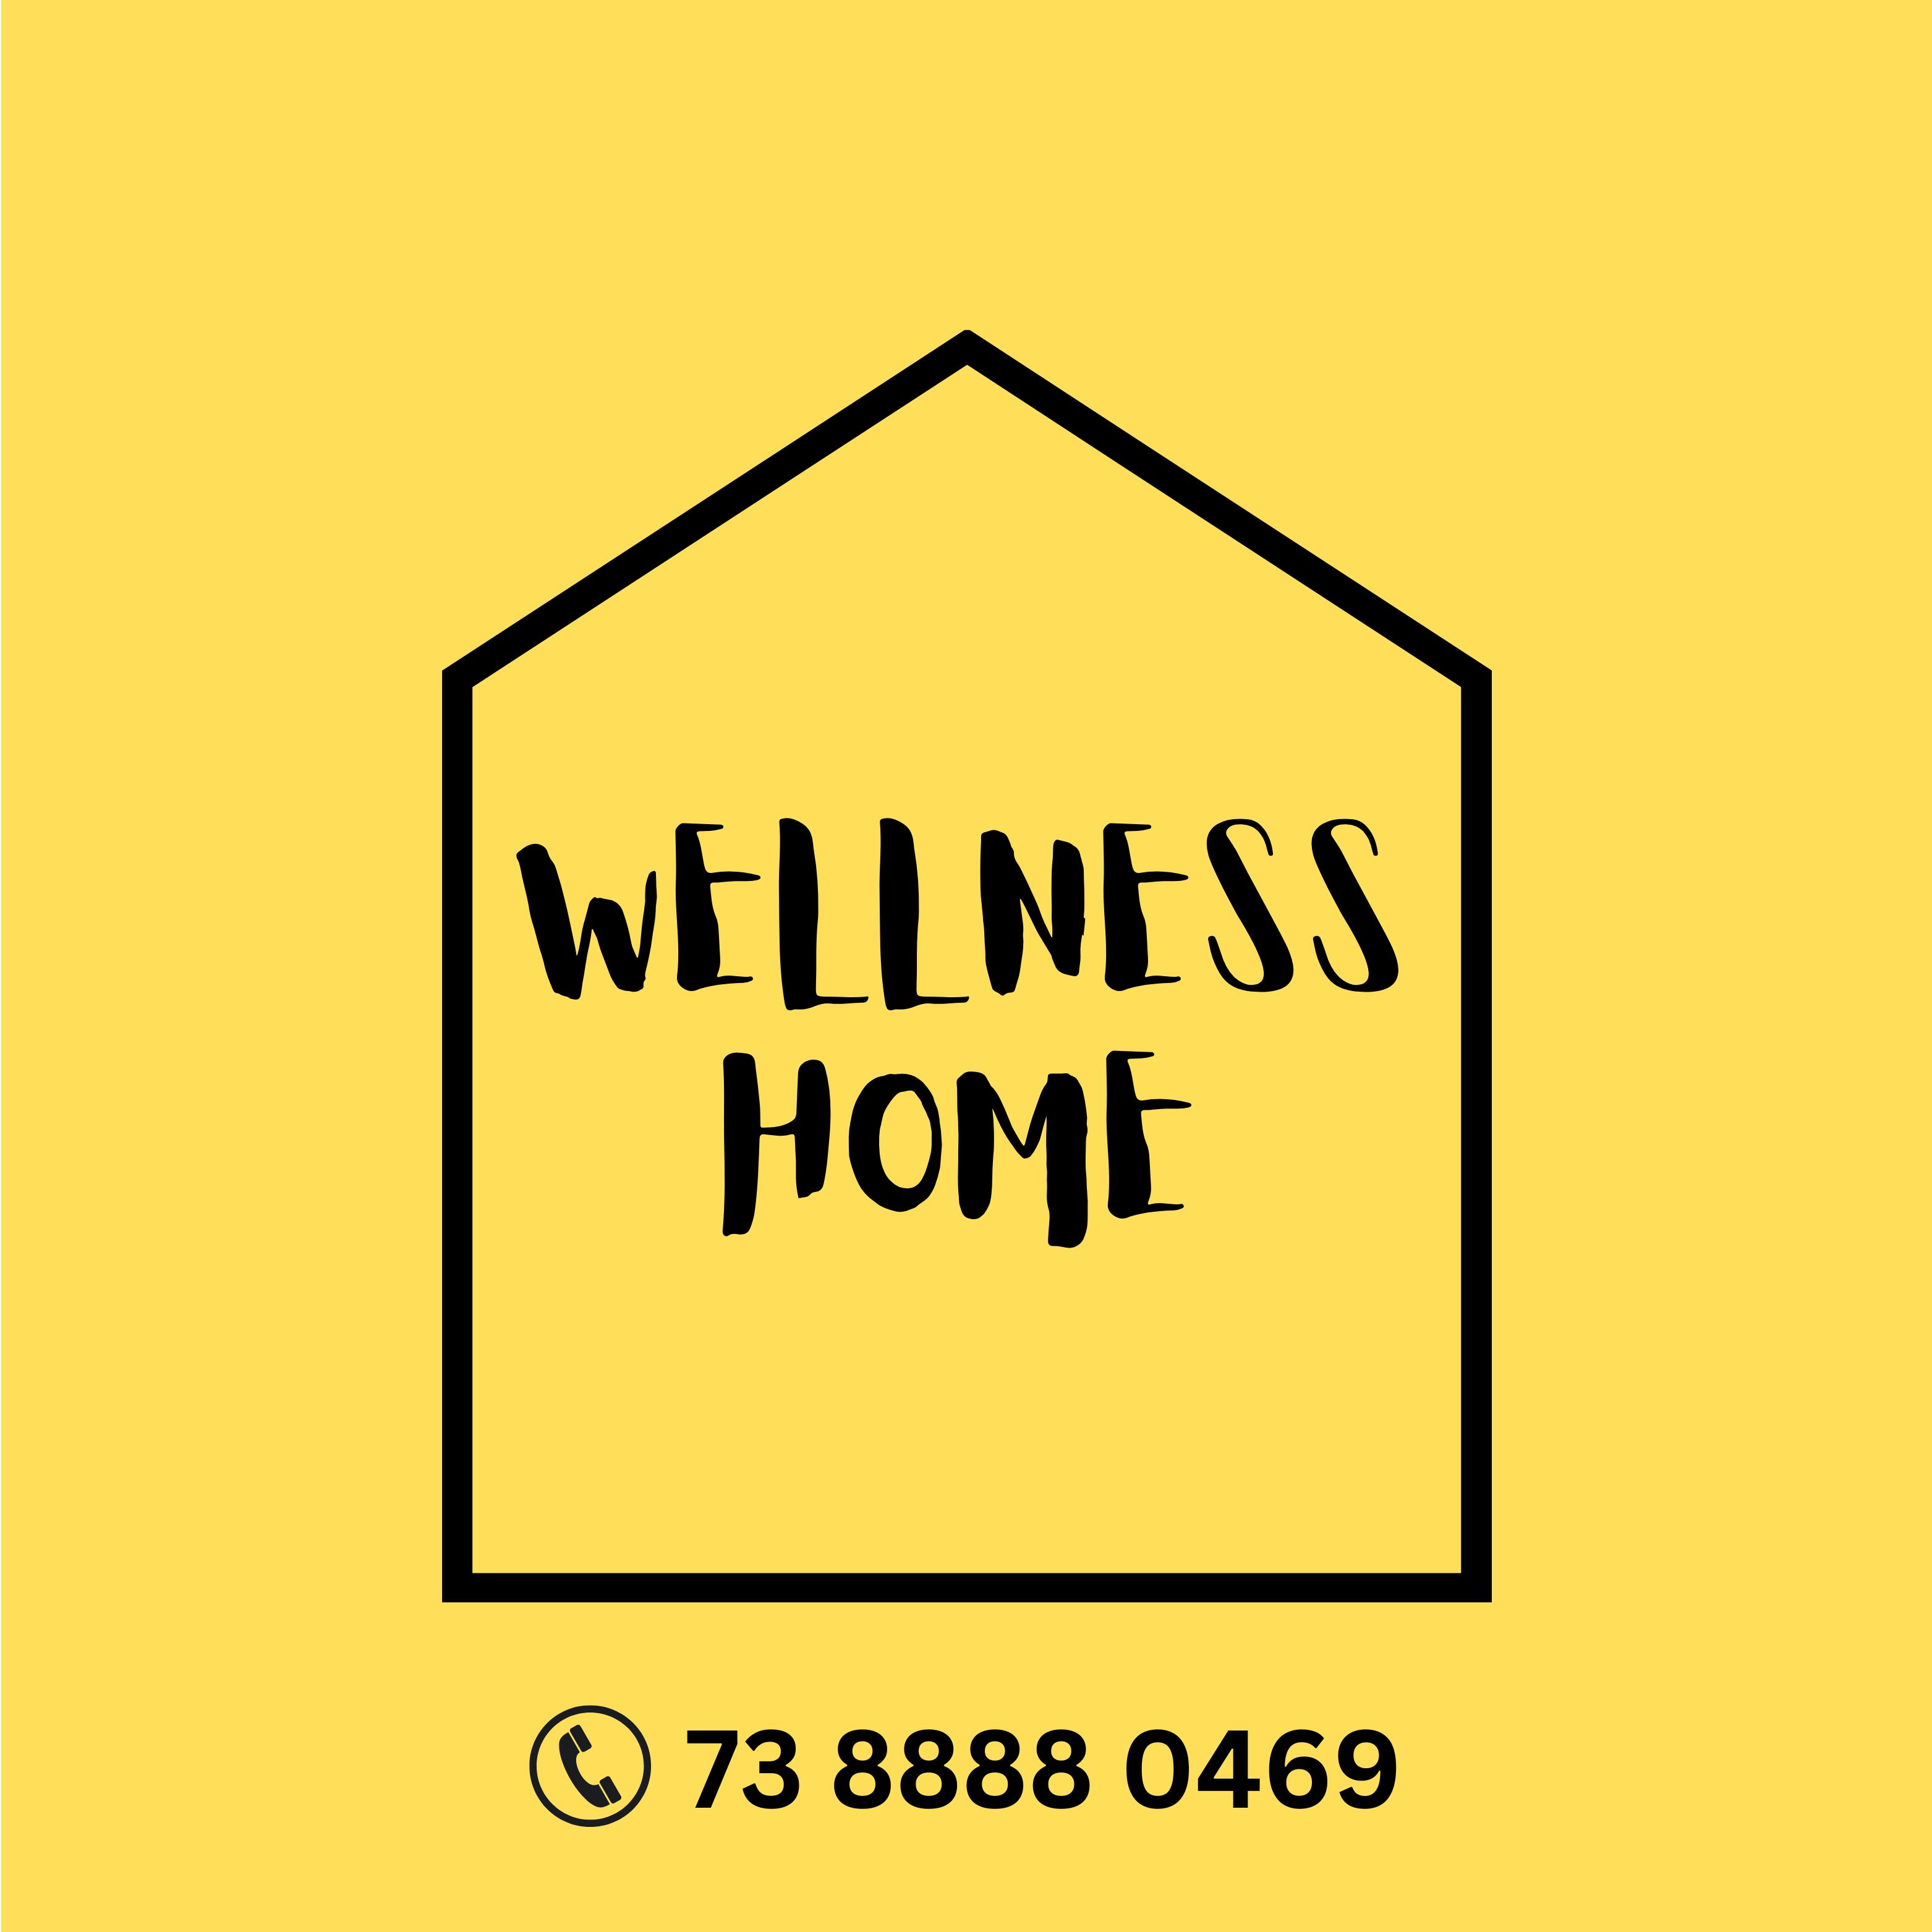 Wellness Home (Hotel) Logo